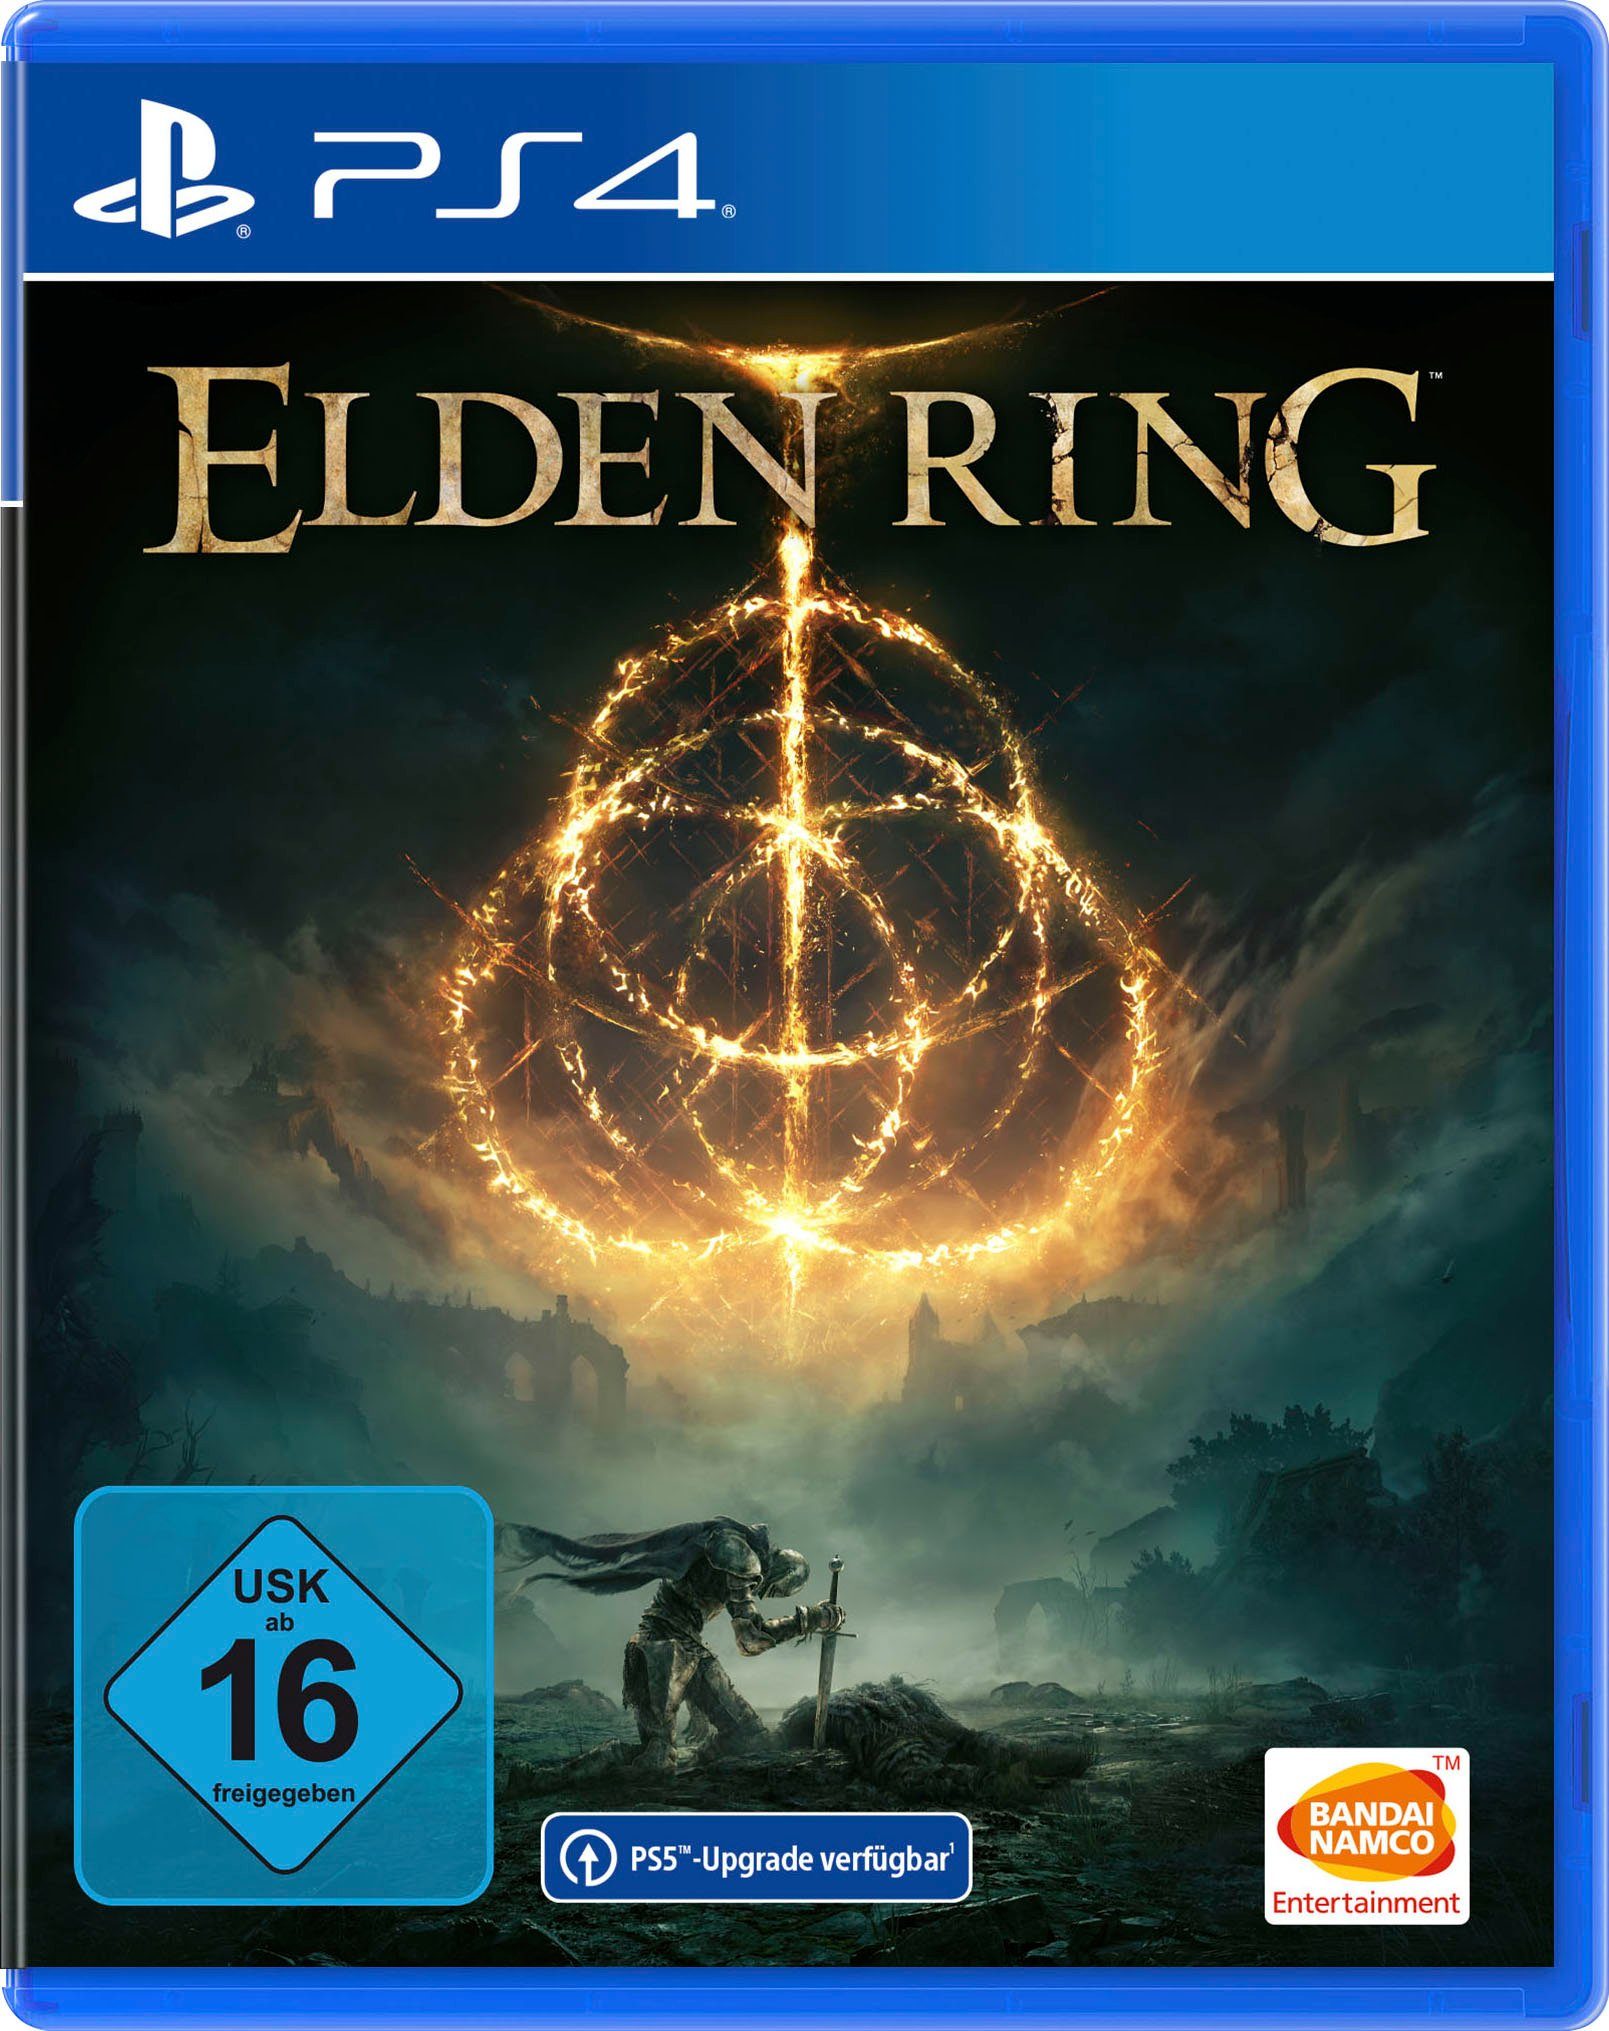 Elden Ring 4 PlayStation Bandai